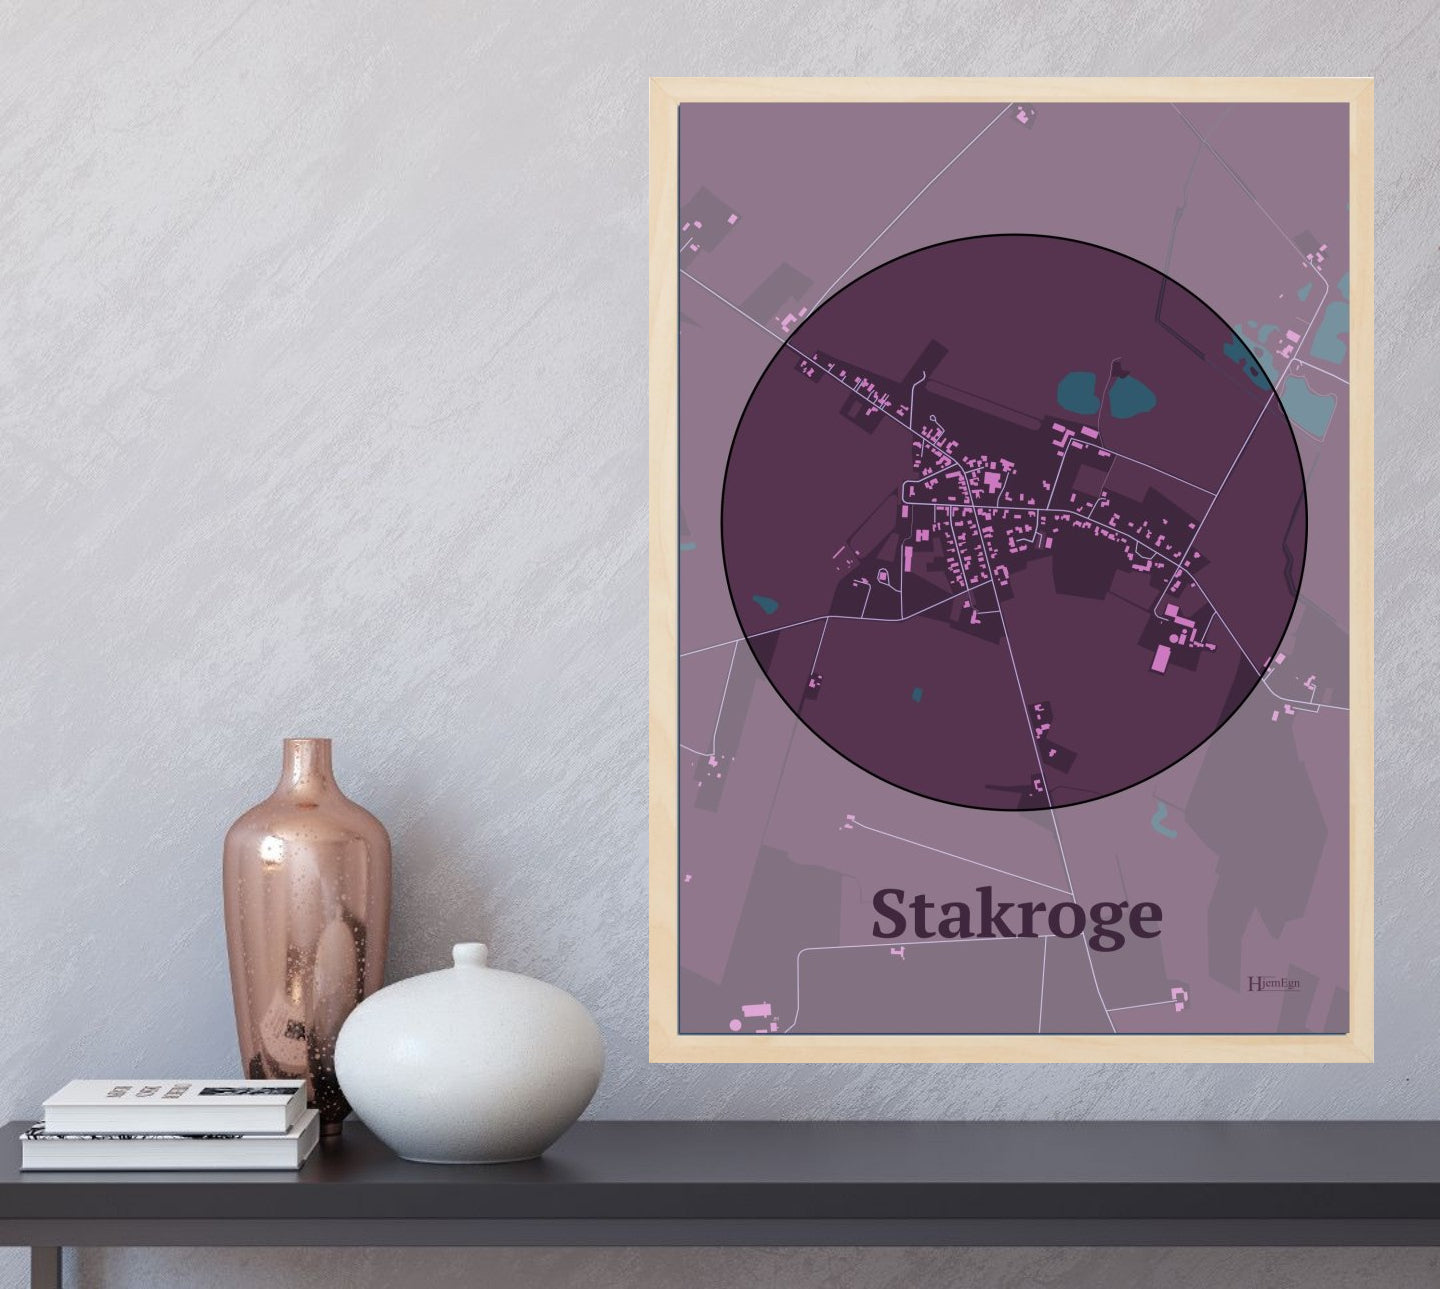 Stakroge plakat i farve  og HjemEgn.dk design centrum. Design bykort for Stakroge